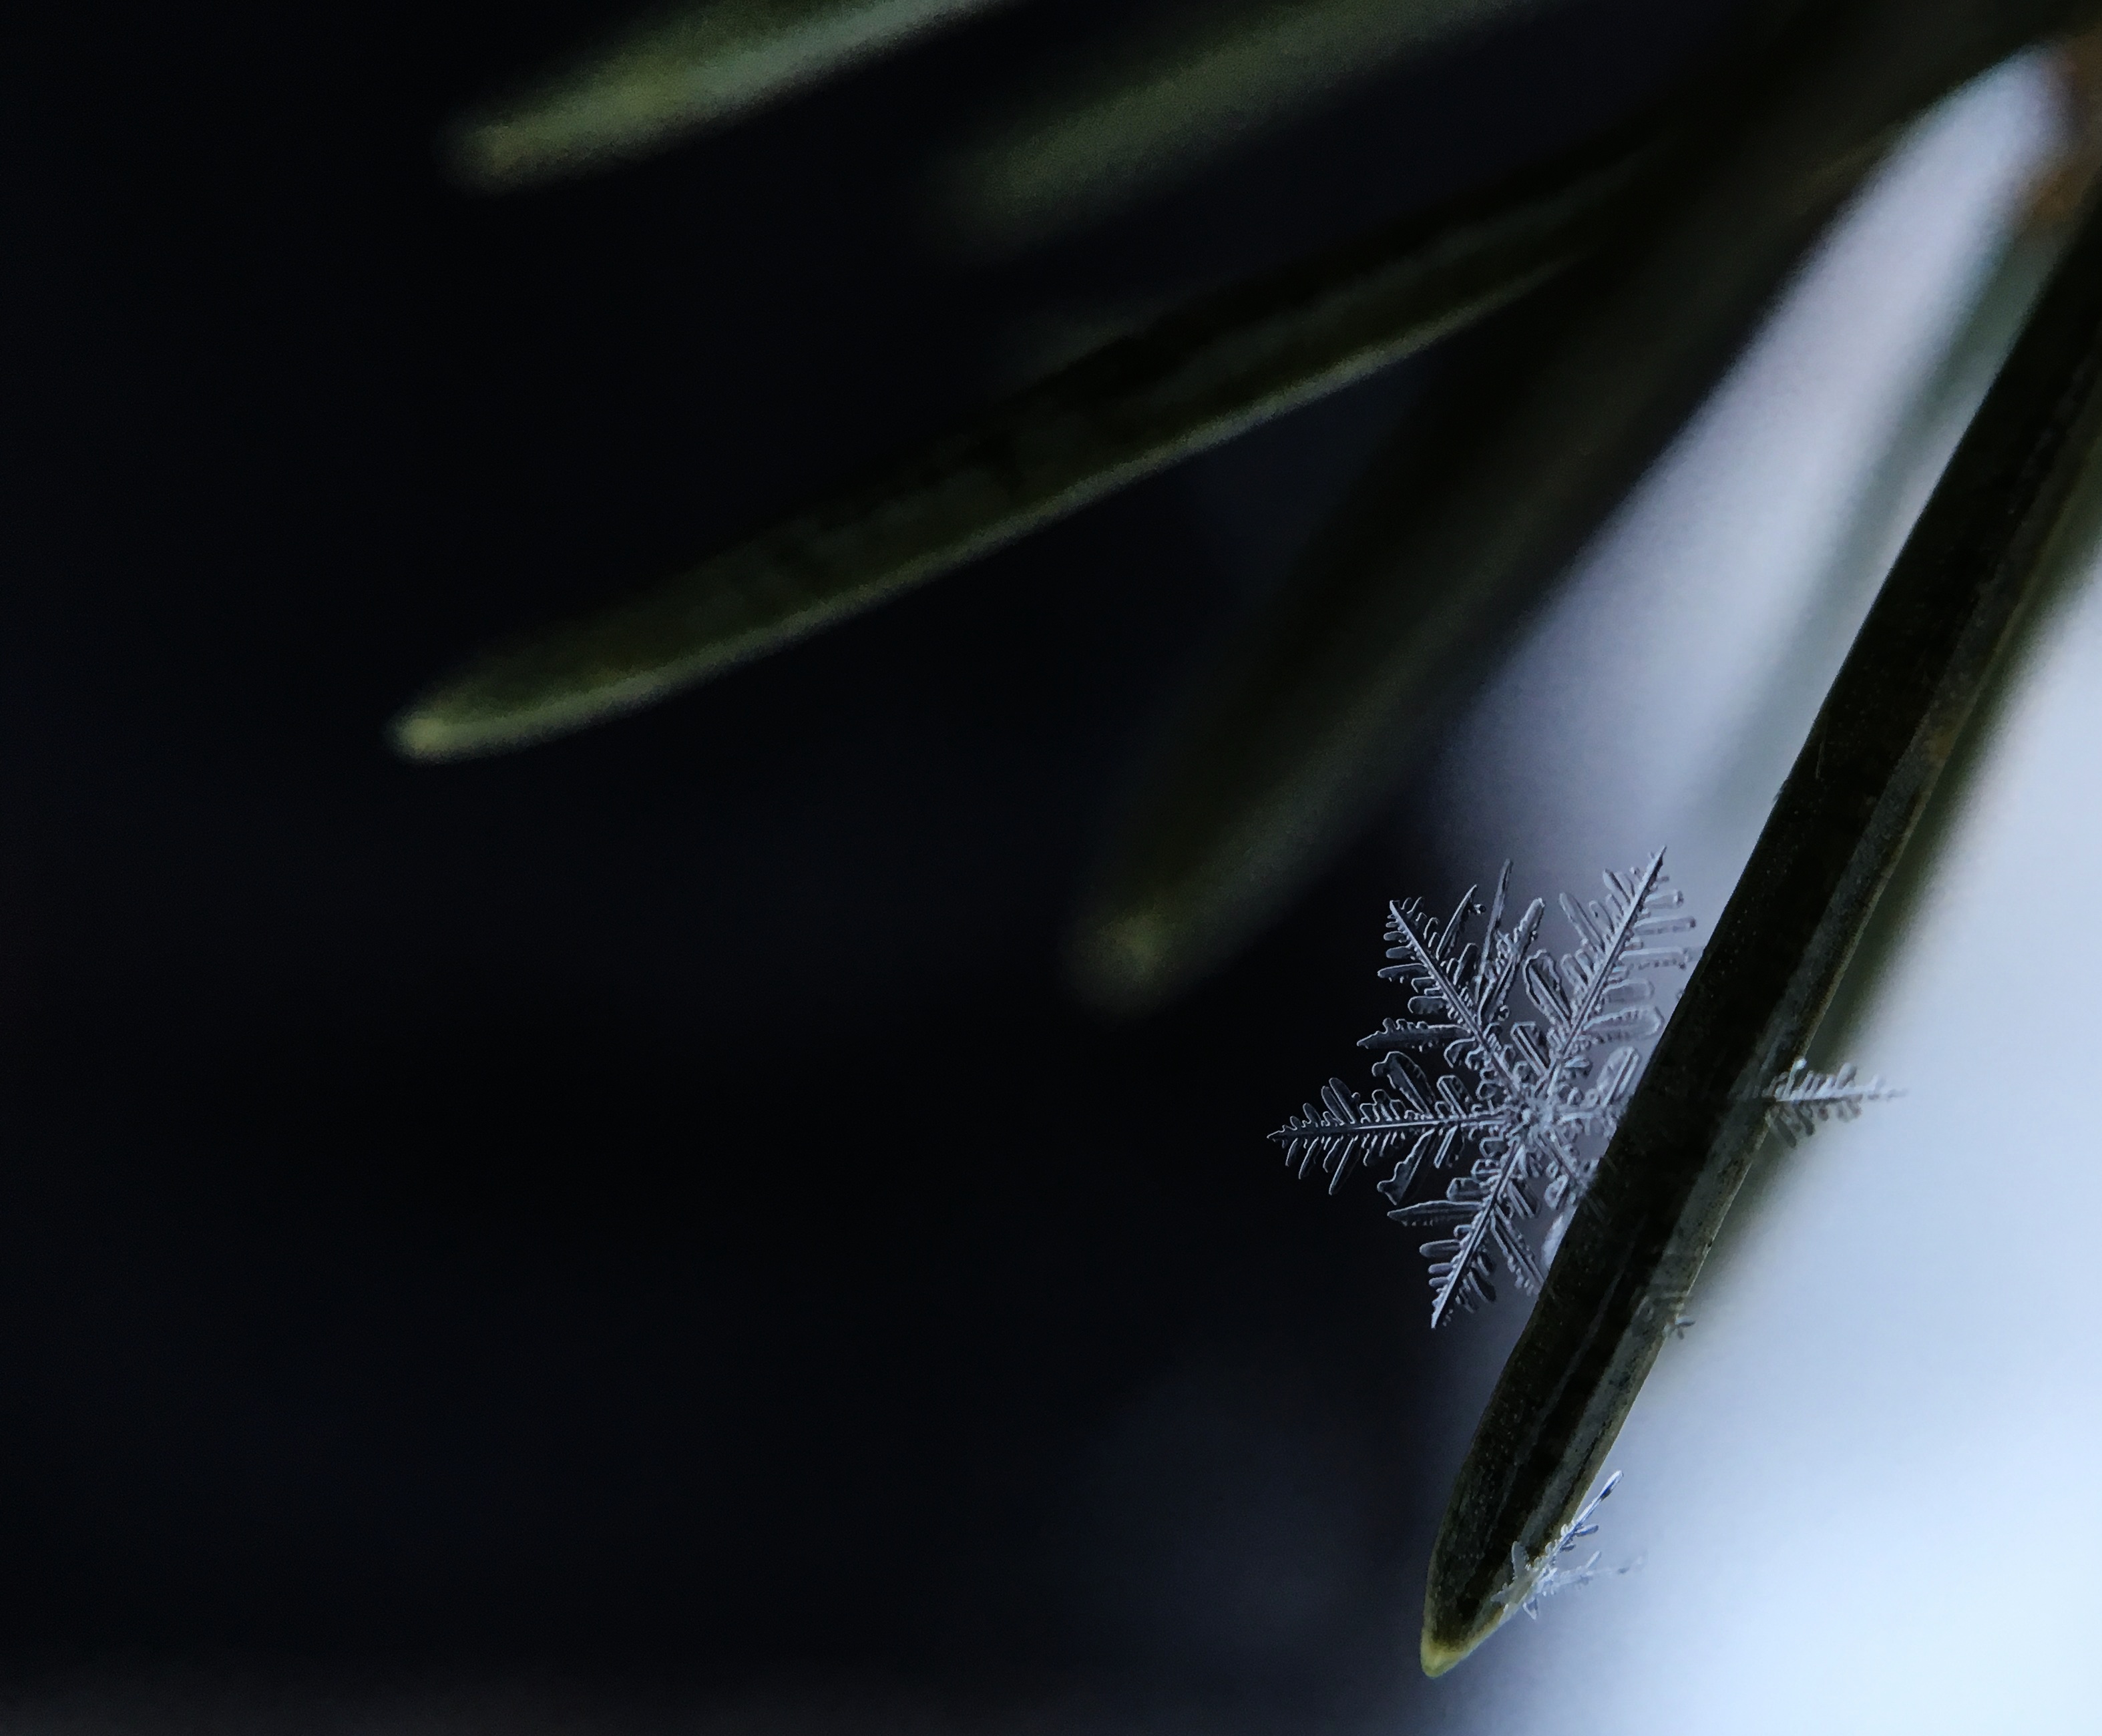 A little snowflake on a Christmas tree needle